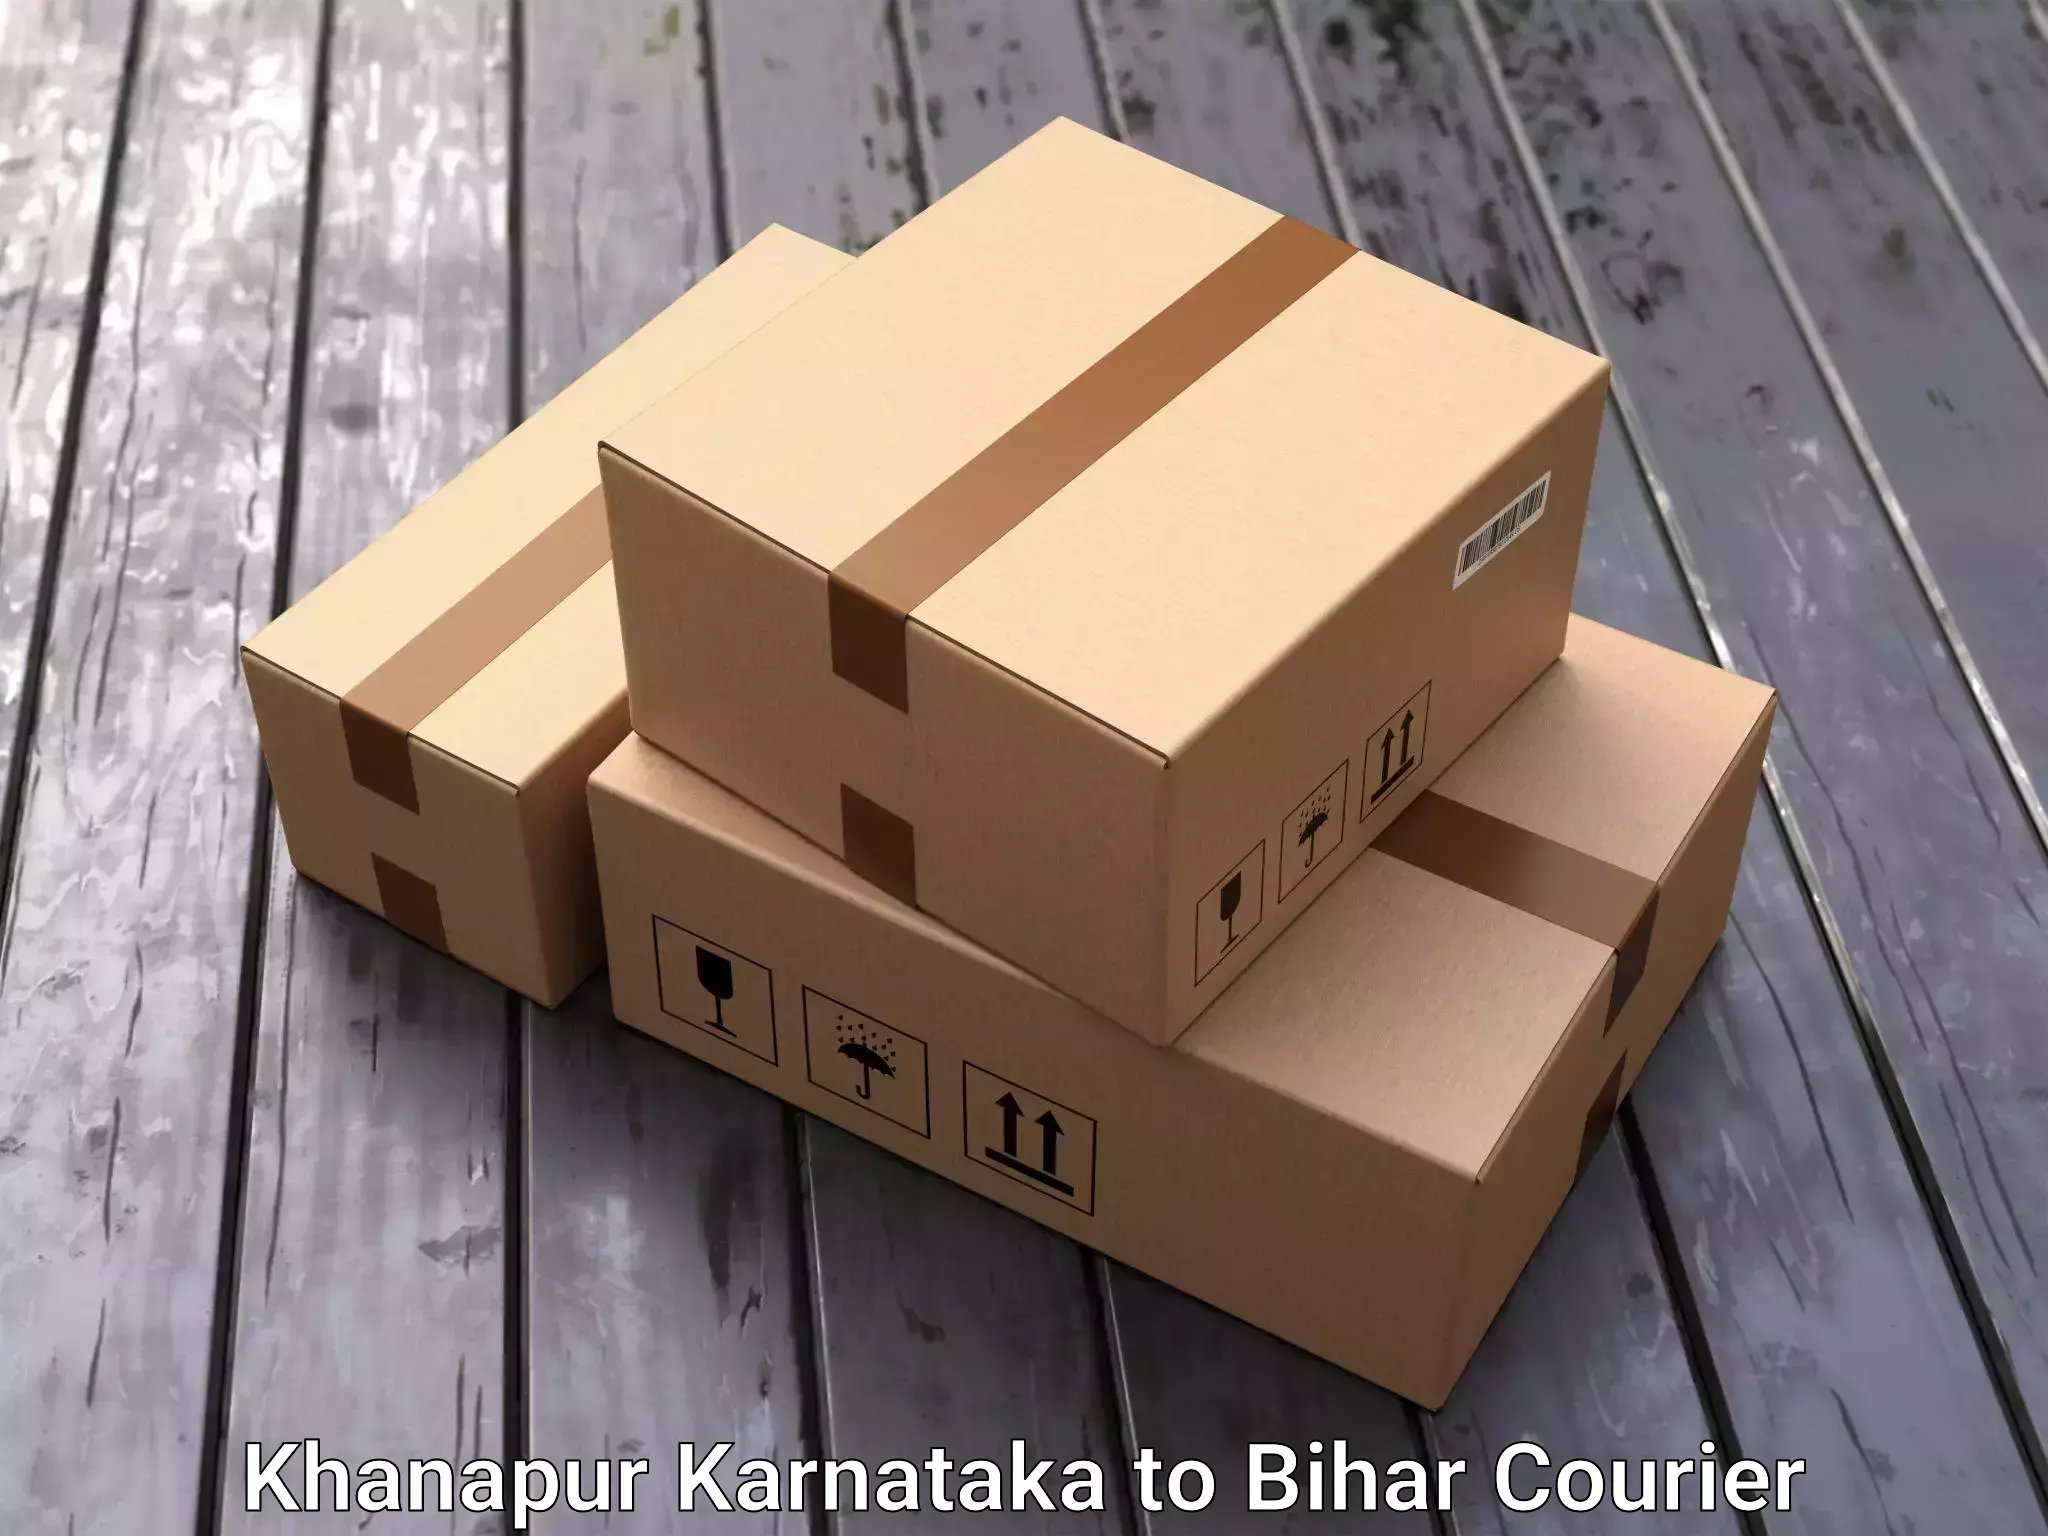 Home goods moving company Khanapur Karnataka to Sandesh